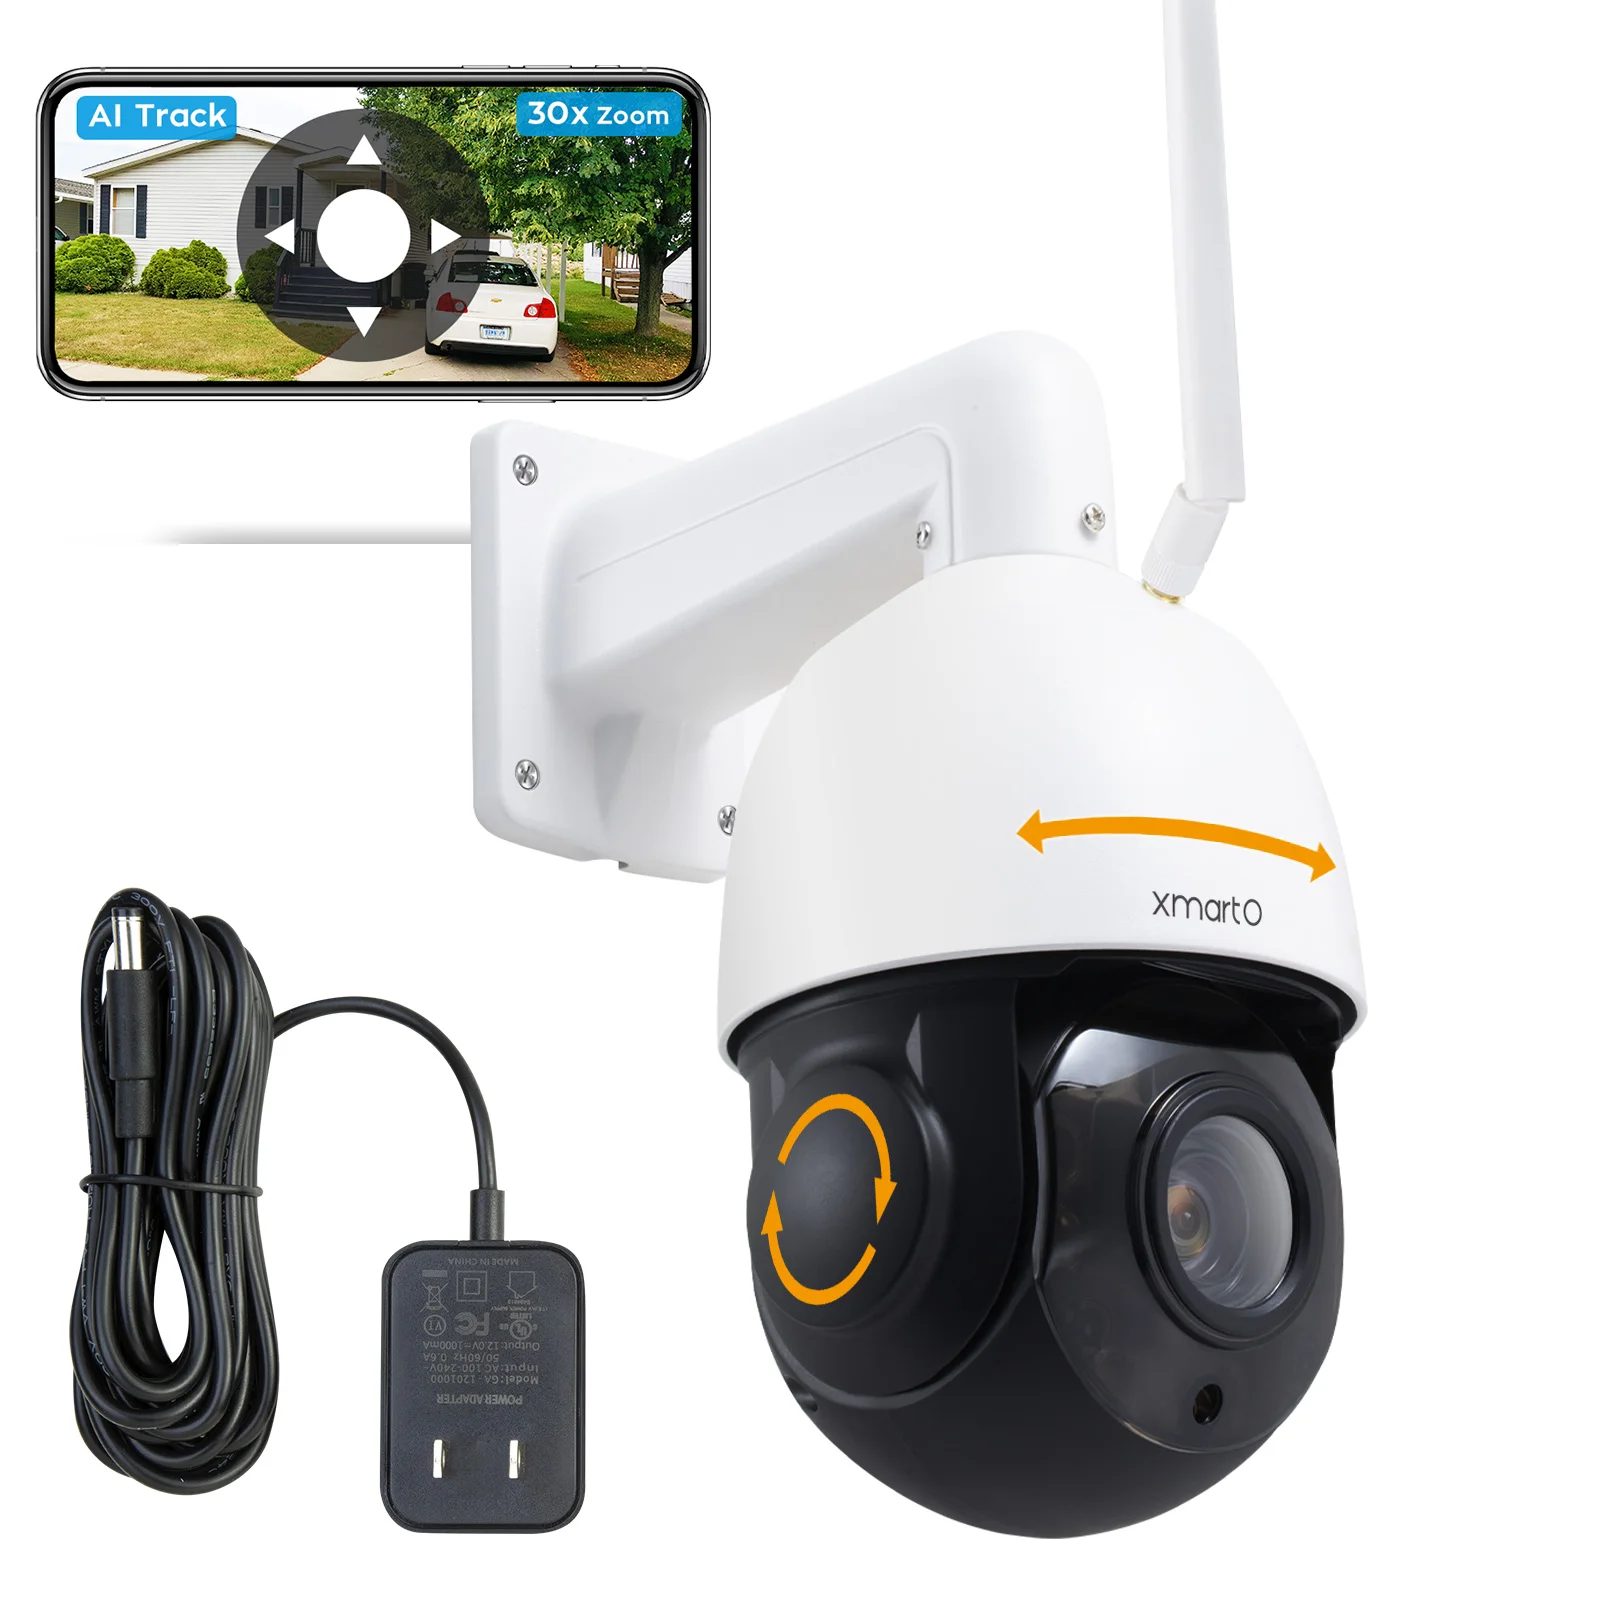 

[AI Track 240x Zoom] XMARTO 3MP Security Camera Outdoor Wireless, AI Auto Track, Auto Flood Light, Color Night Vision (DX30530)